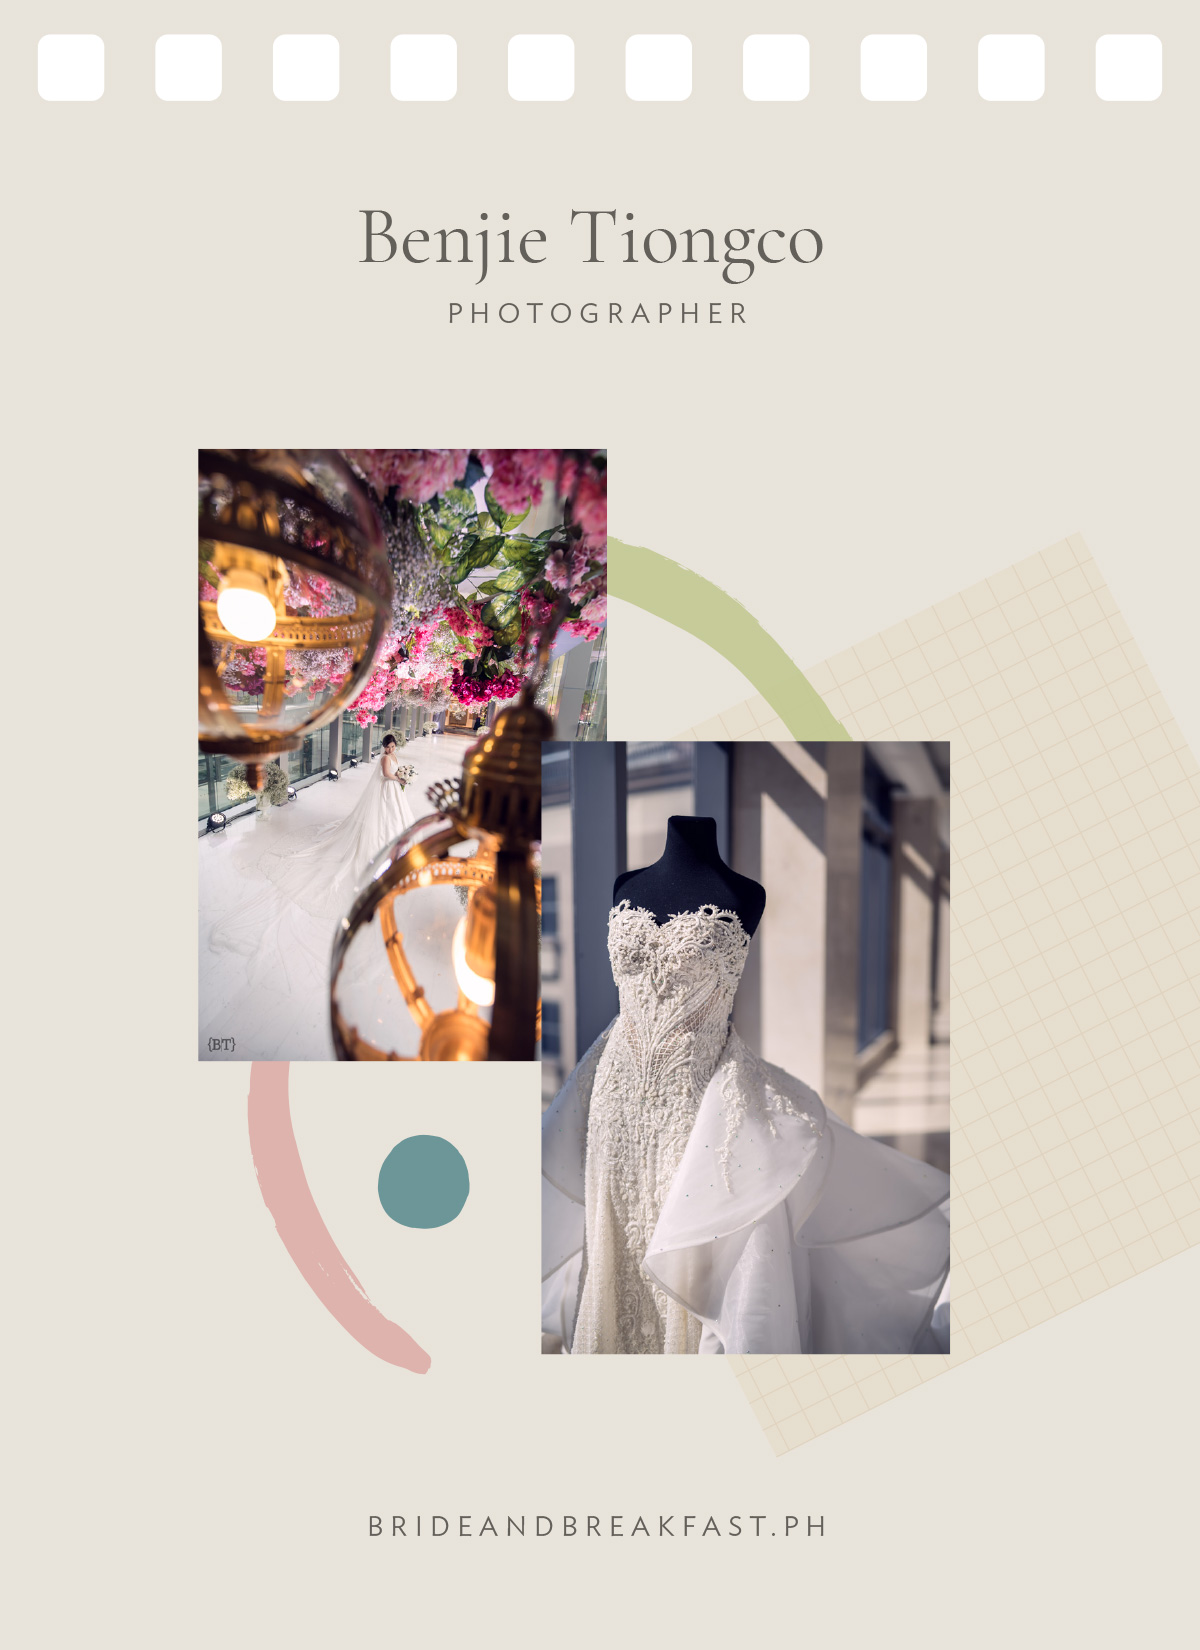 Benjie Tiongco